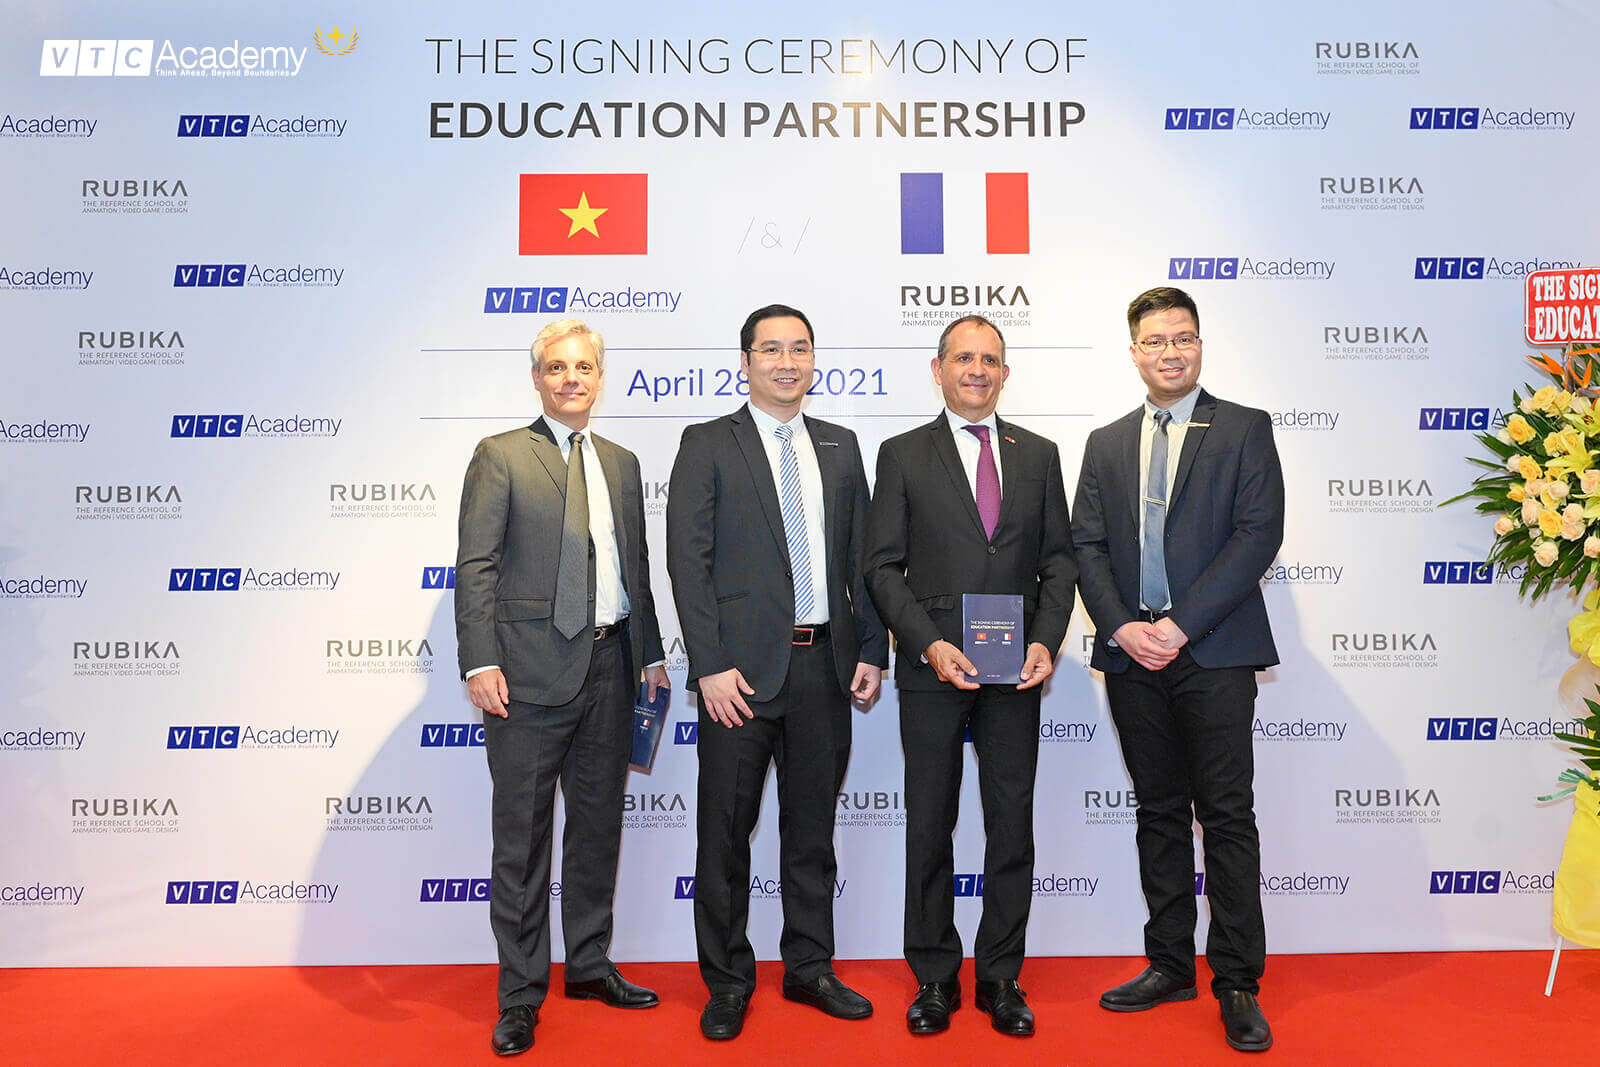 Education Partnership between VTC Academy and RUBIKA - France